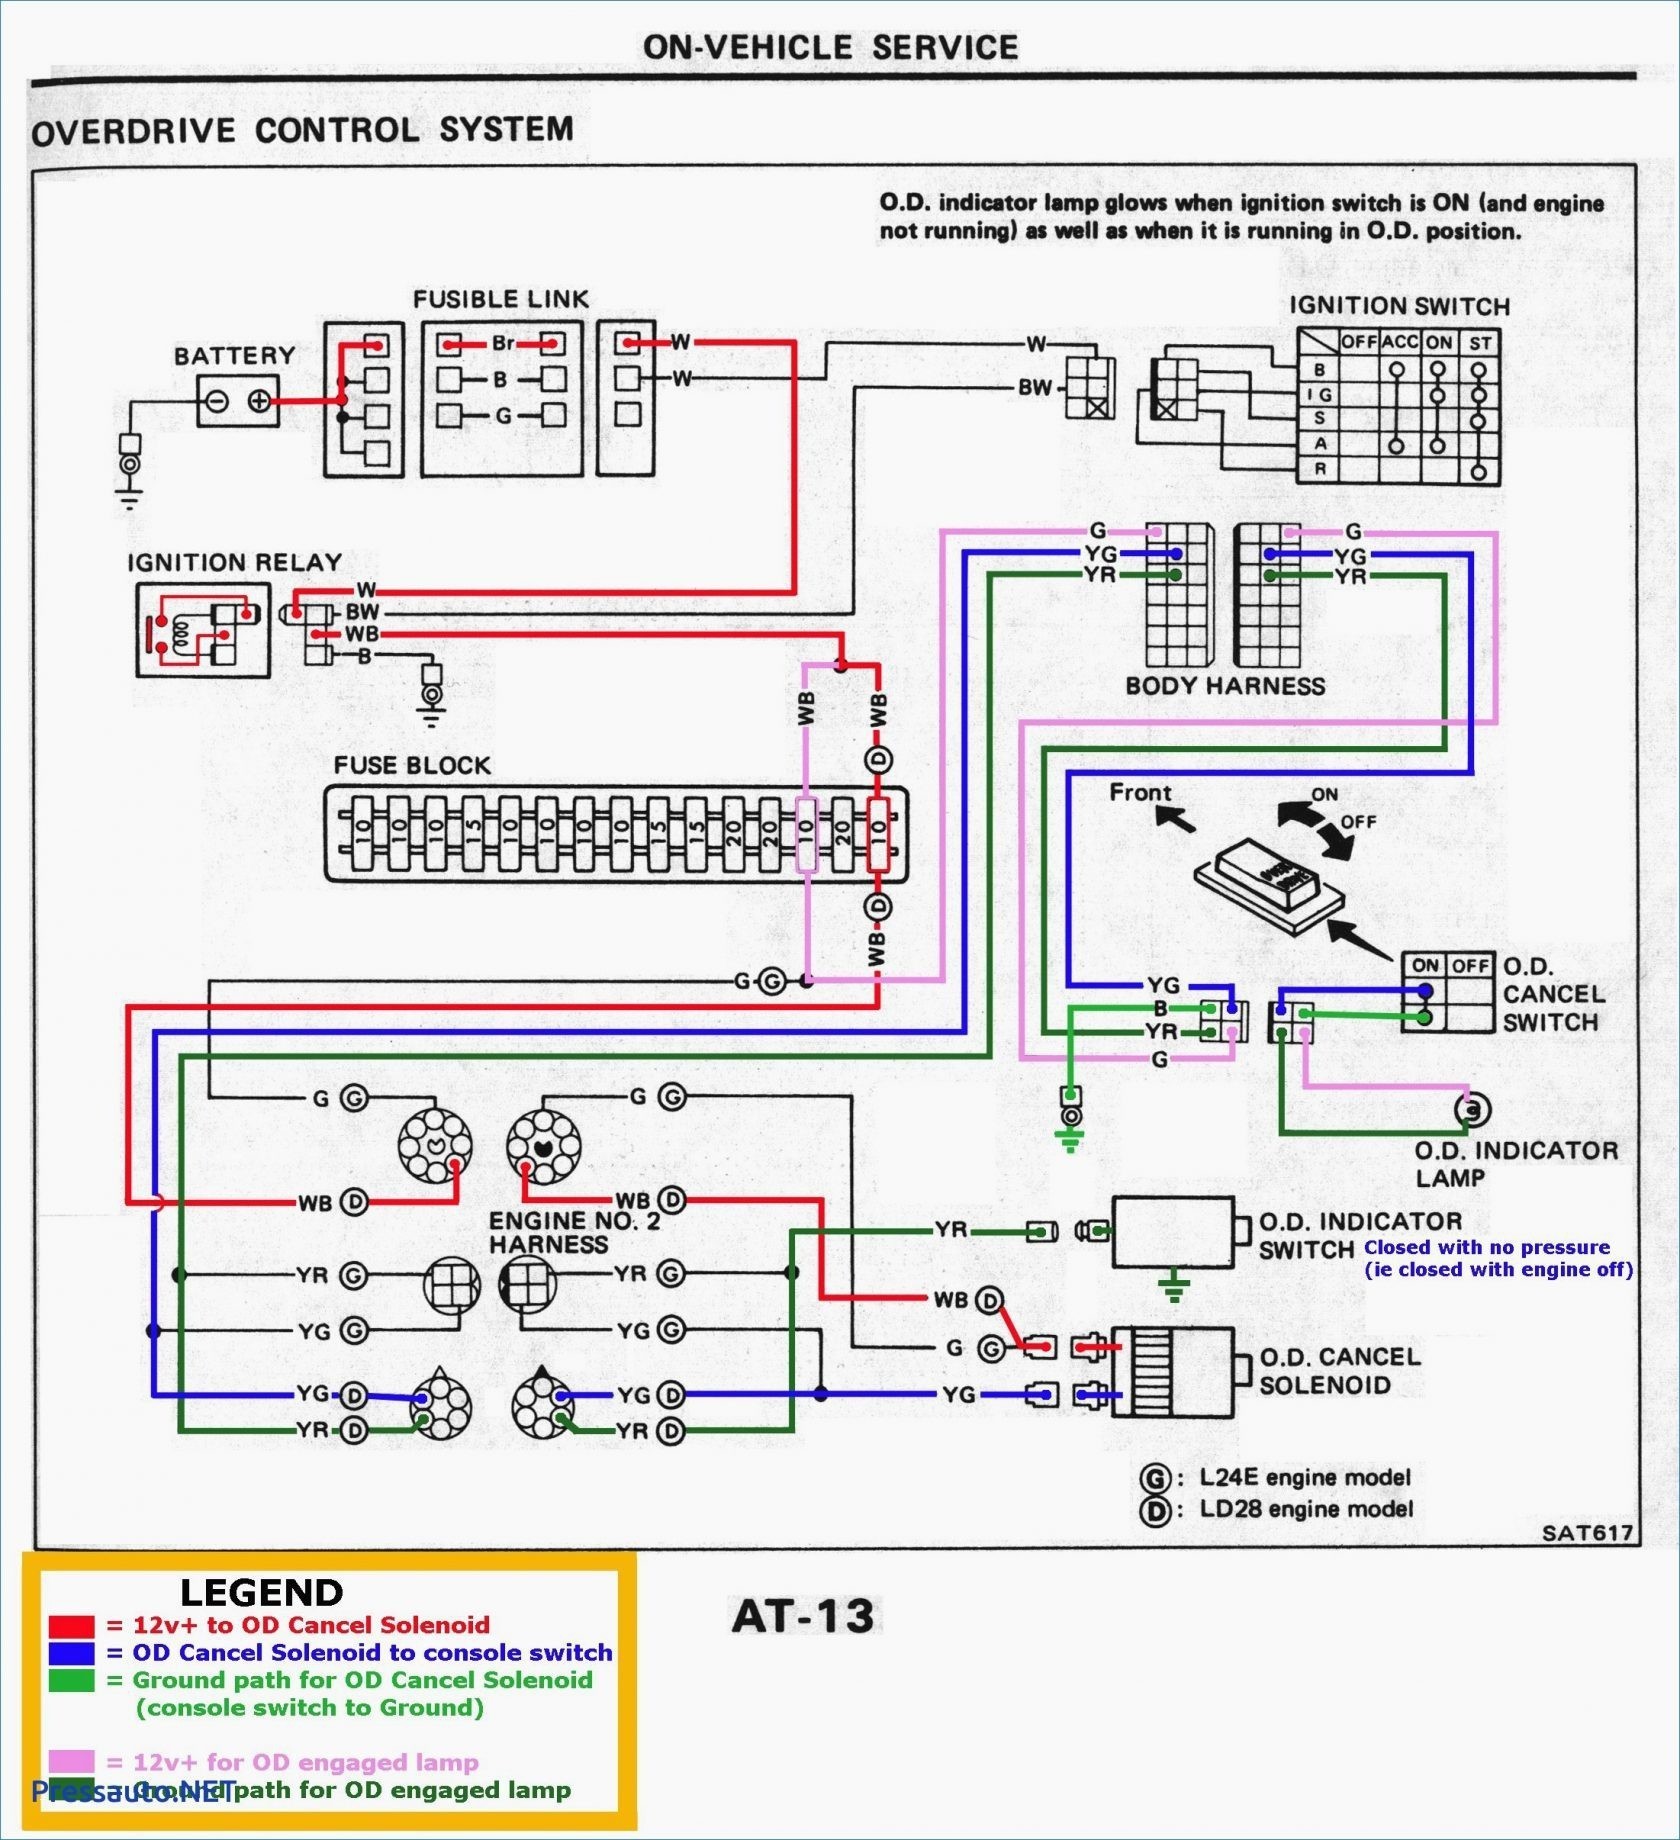 Lifan Generator Wiring Diagram Fresh Wiring Diagram for Push button Start Inspirationa Ignition Relay